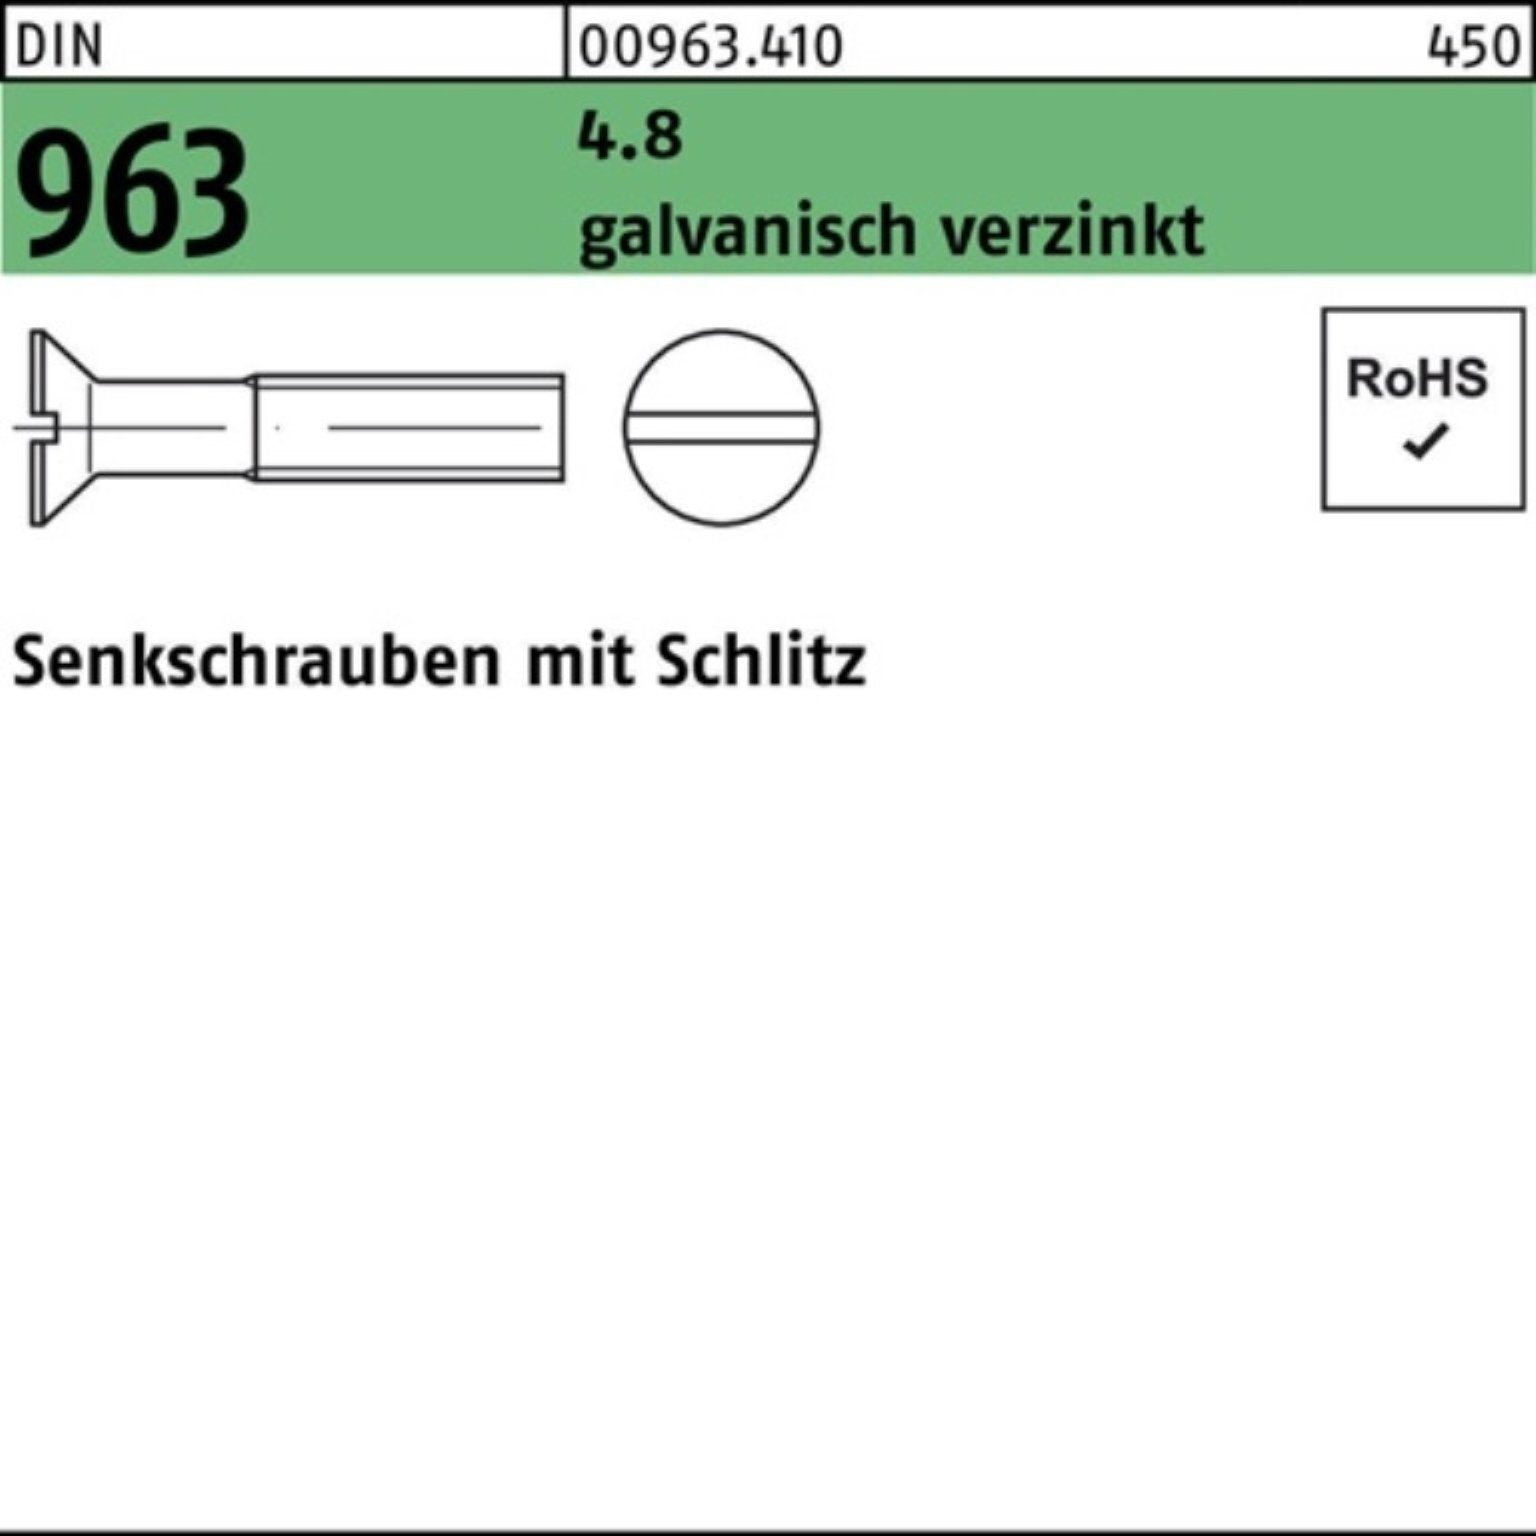 Reyher Schlitz DIN M4x 200 Stü galv.verz. 200er Senkschraube Senkschraube 963 4.8 Pack 18